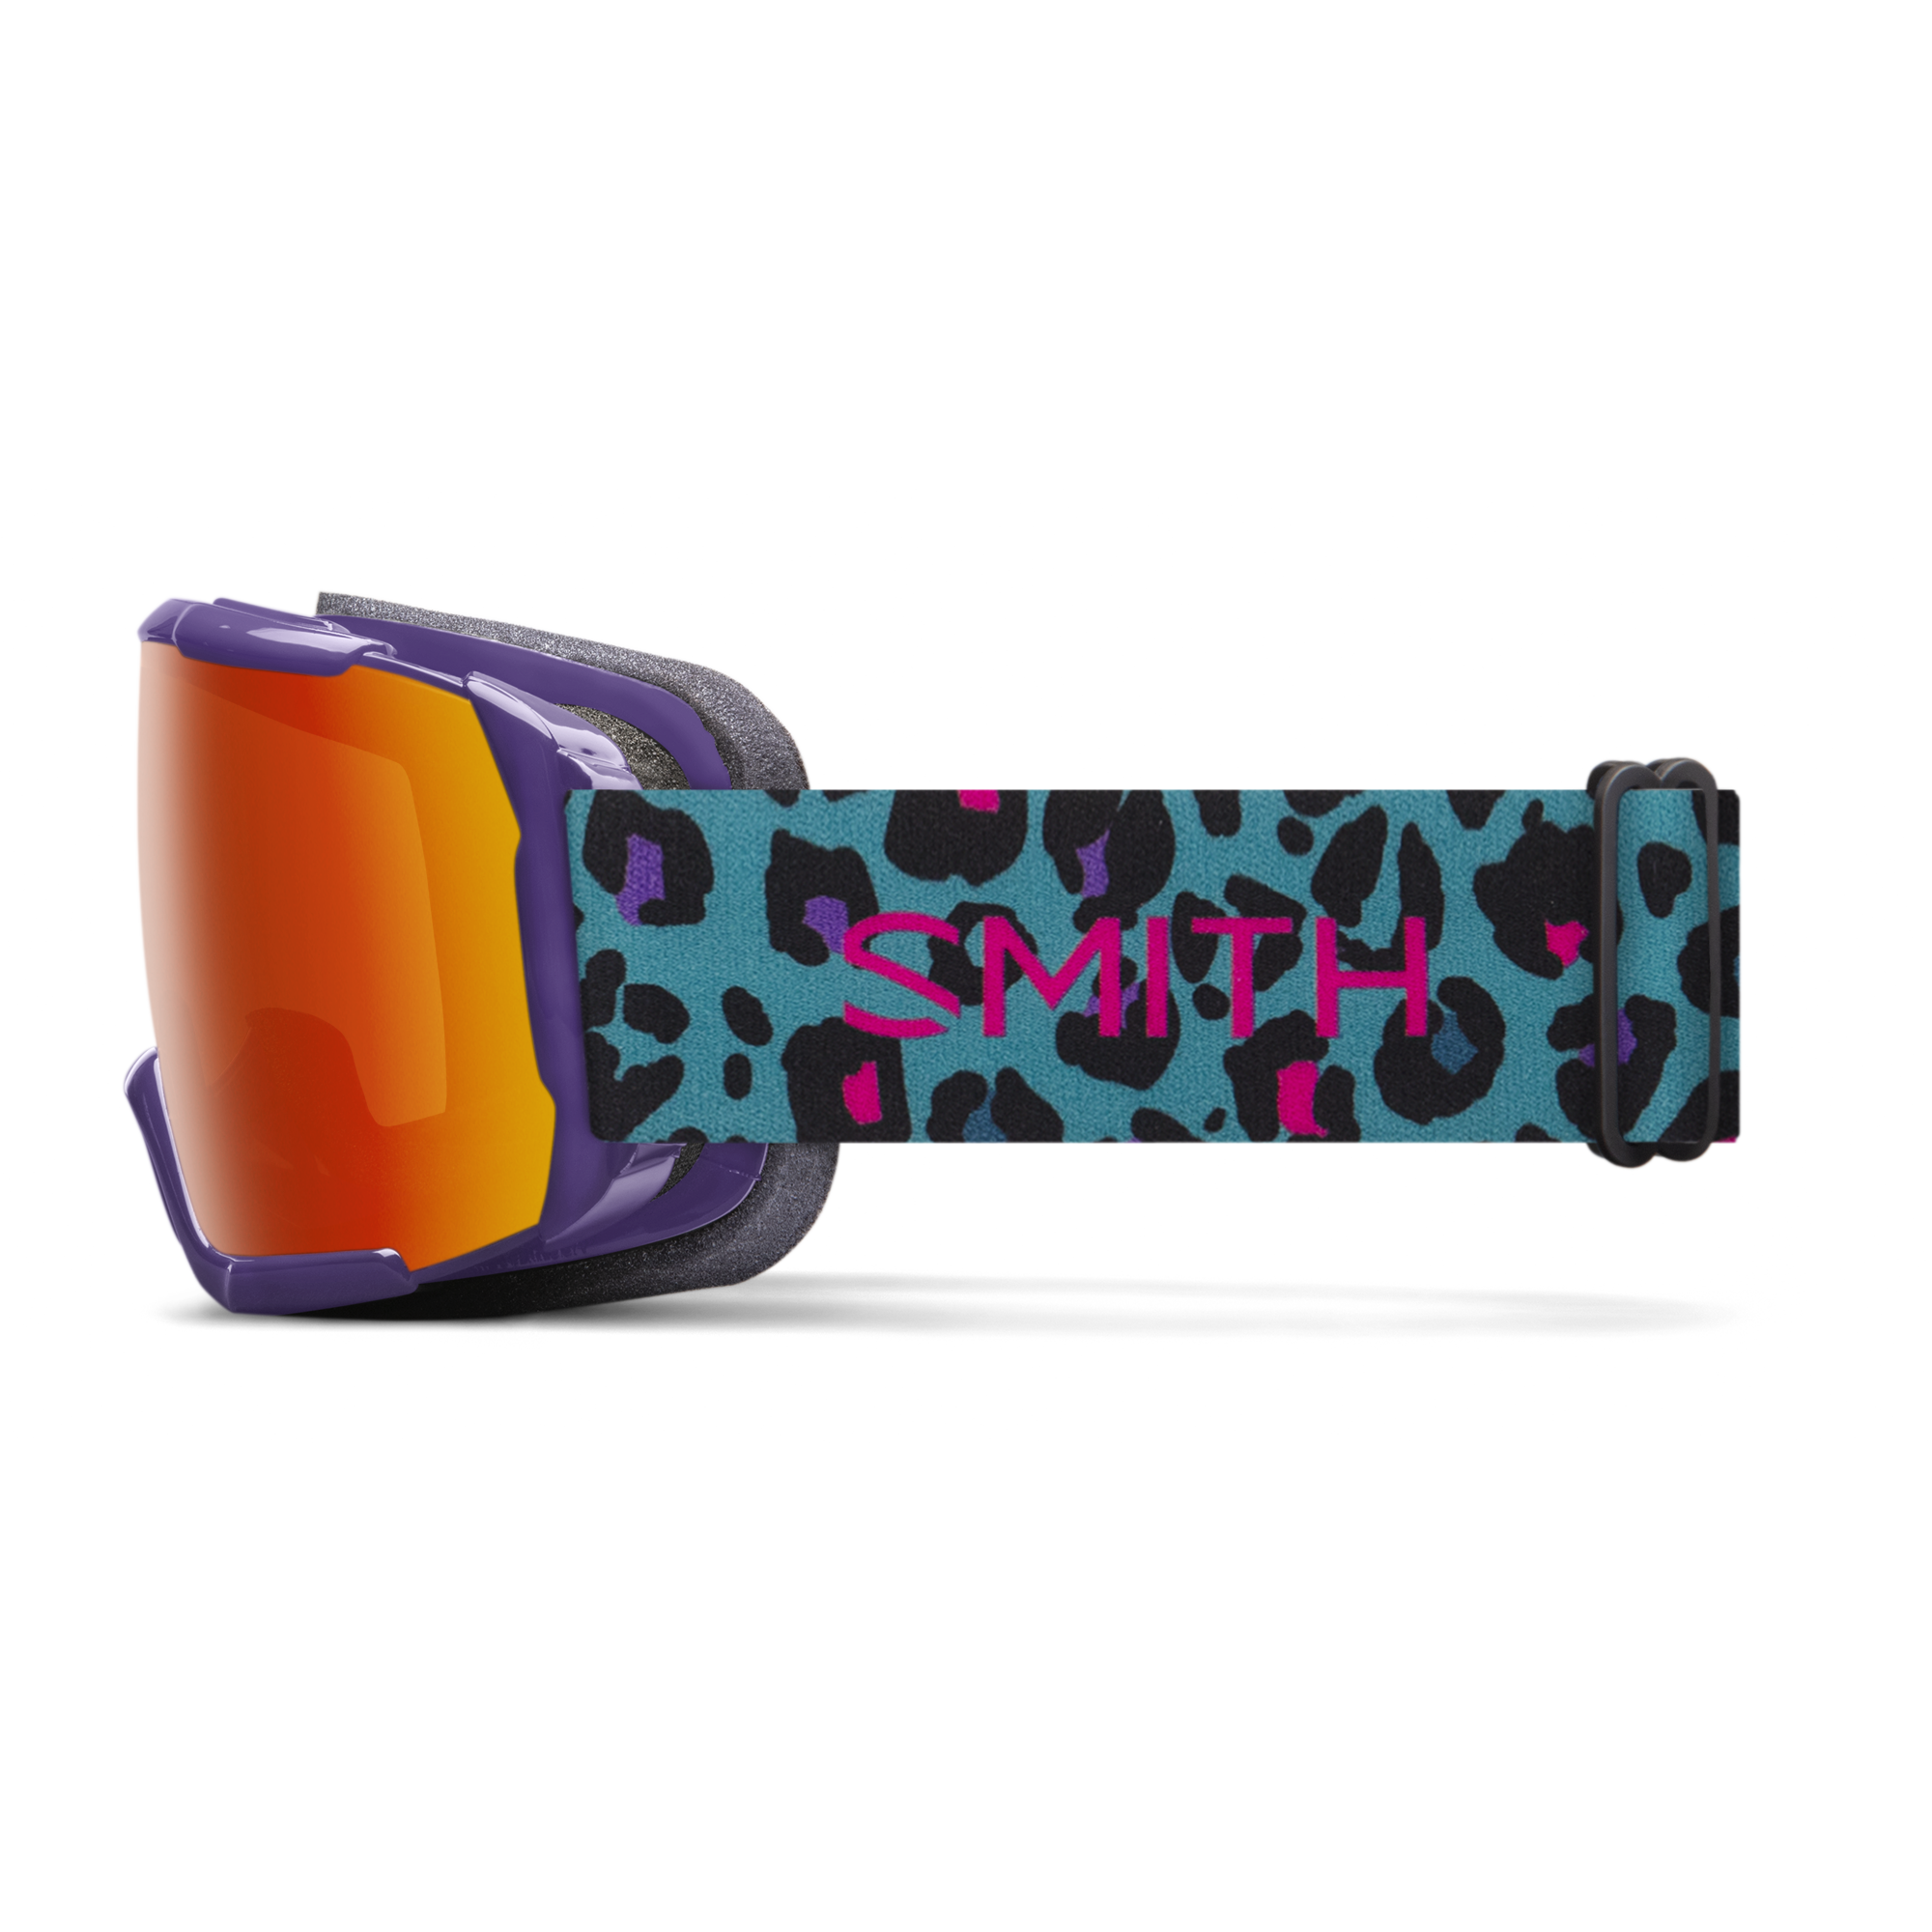 Kid's smith goggles, purple frame with blue, black and pink cheetah print adjustable band. Orange Chromapop lenses.